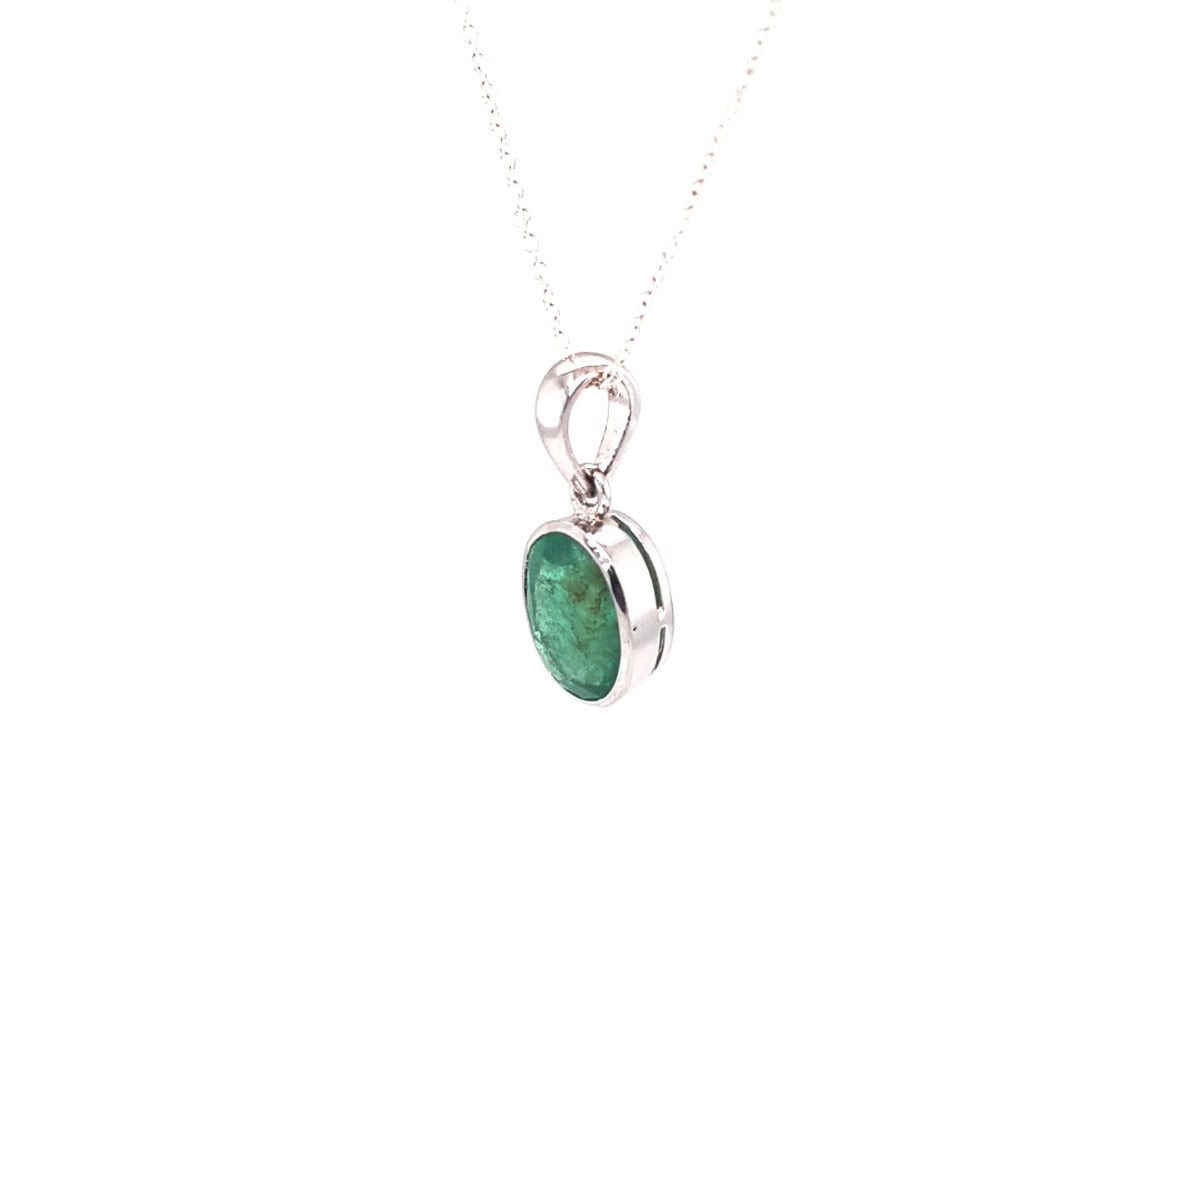 Stunning emerald  pendant